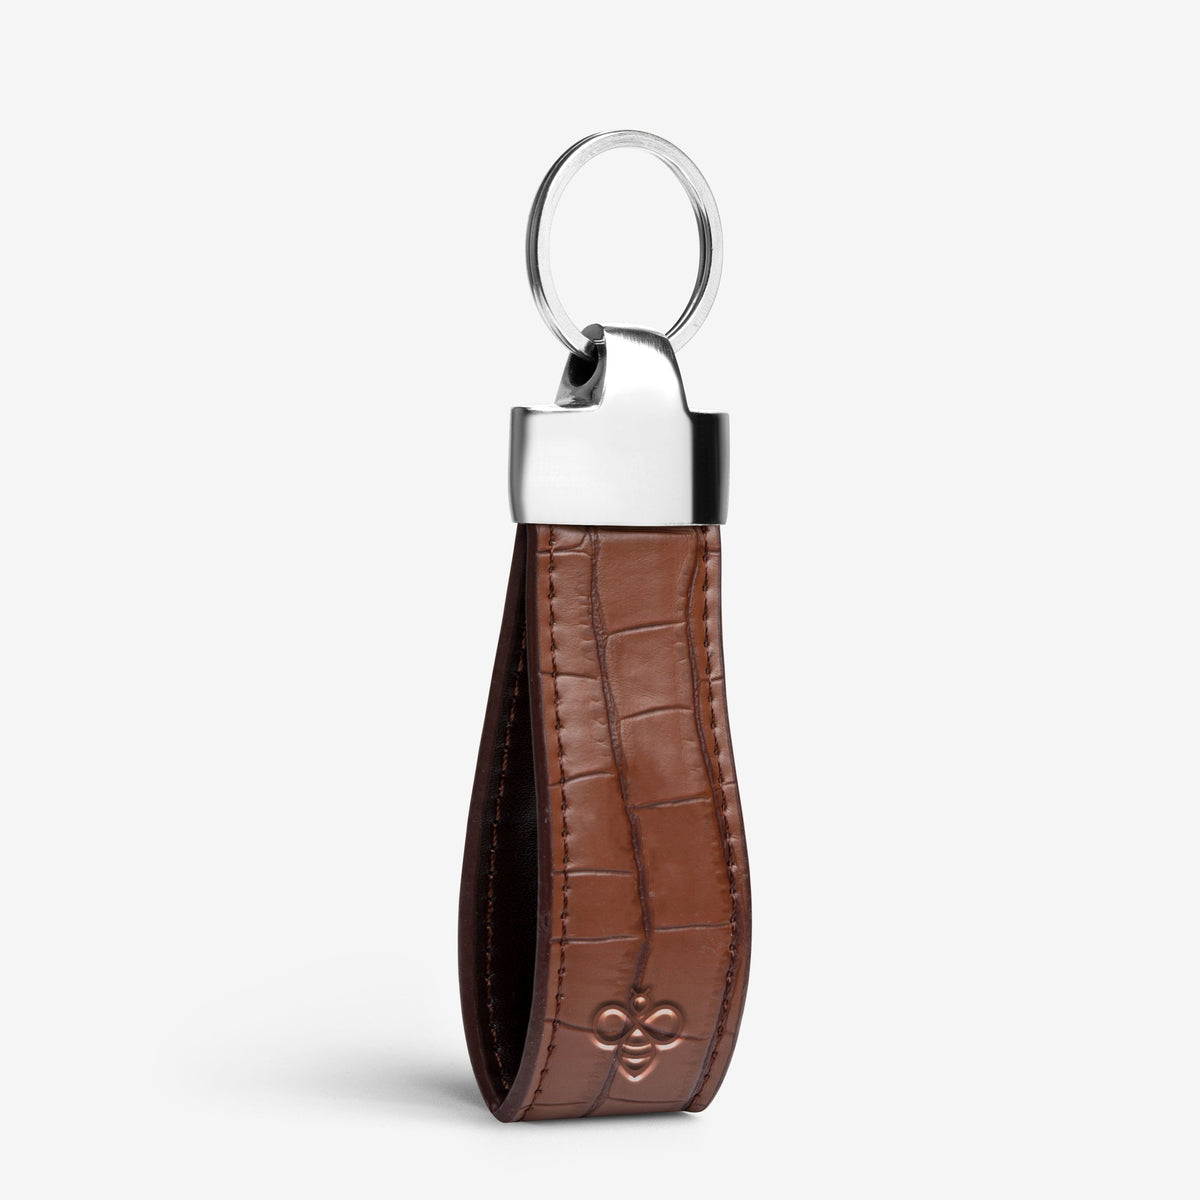 Louis Vuitton Unisex My Travel Tag Key Ring